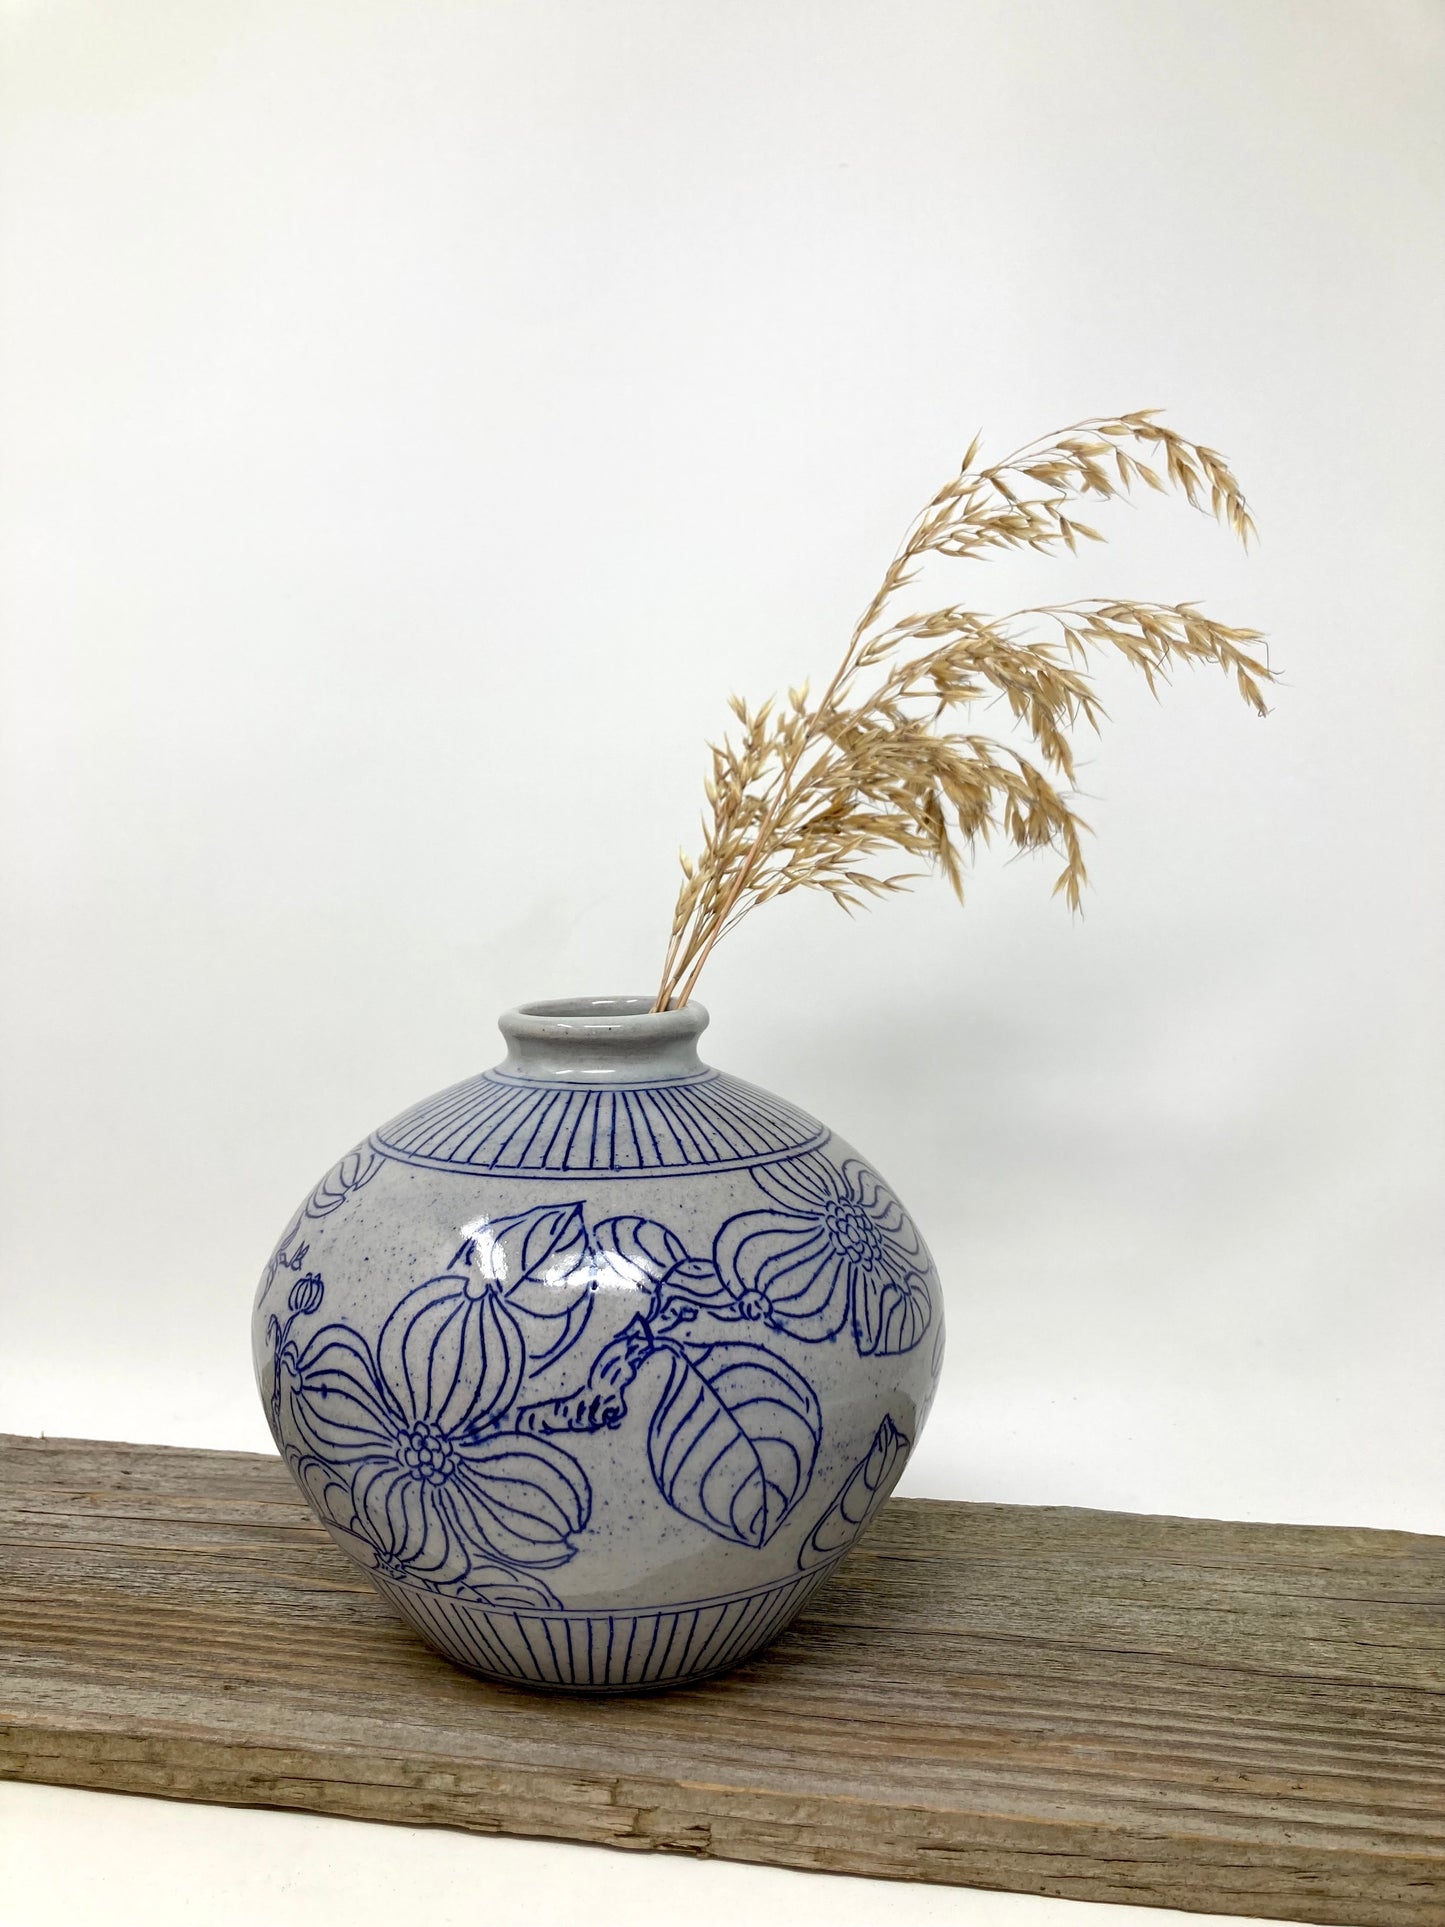 Dogwood Bottle Vase in Blue and Gray